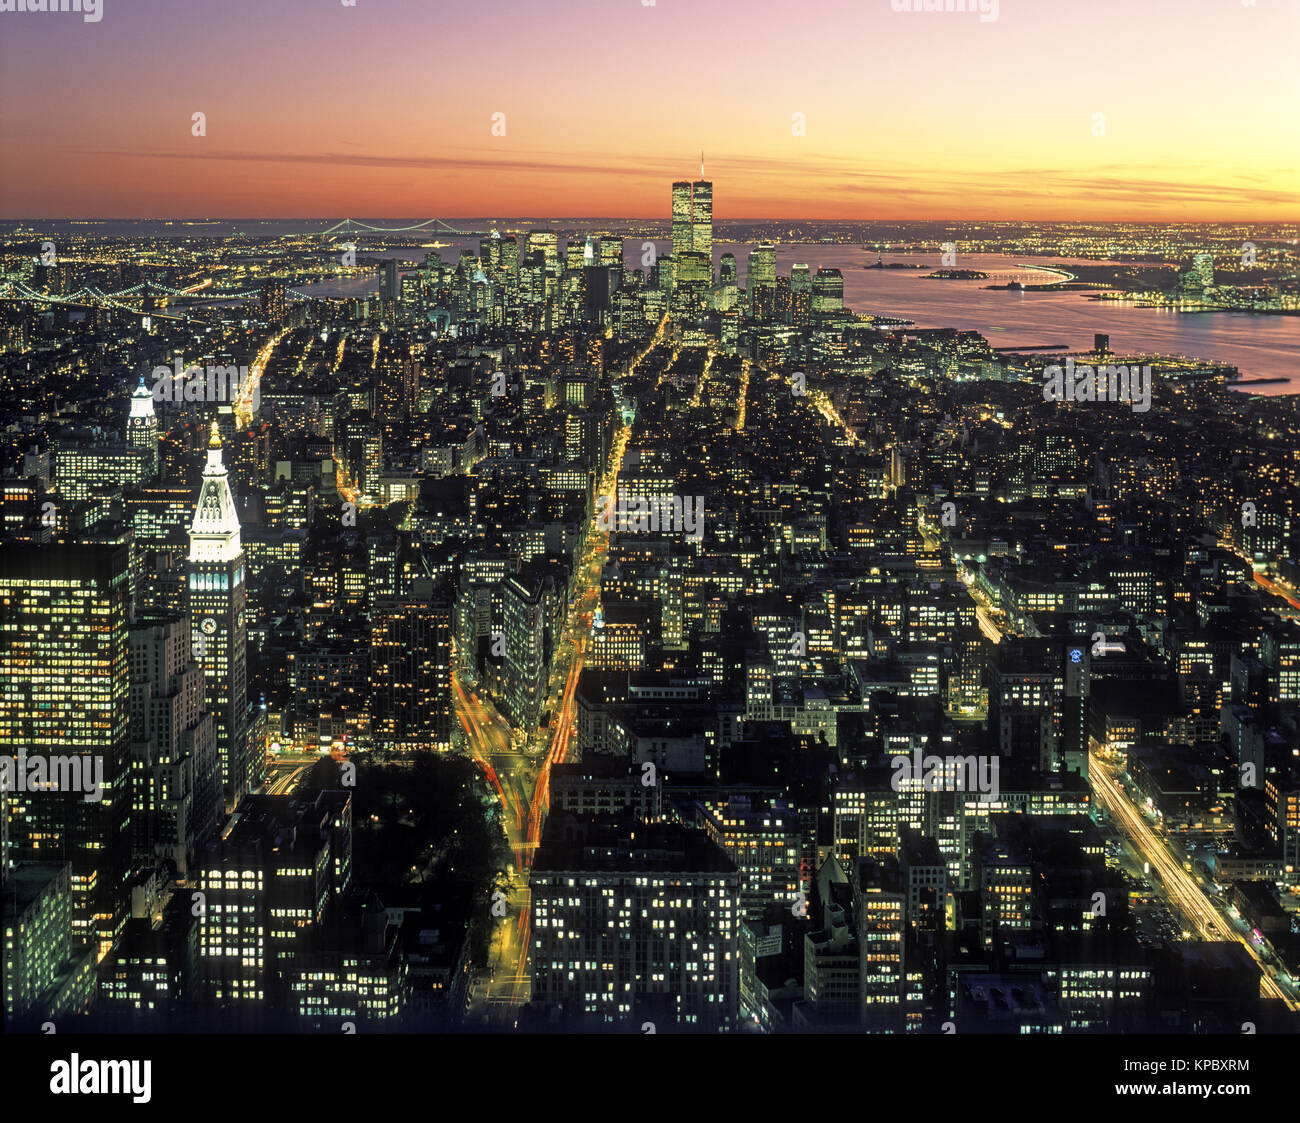 1994 HISTORICAL TWIN TOWERS (©MINORU YAMASAKI 1973) DOWNTOWN SKYLINE MANHATTAN NEW YORK CITY USA Stock Photo